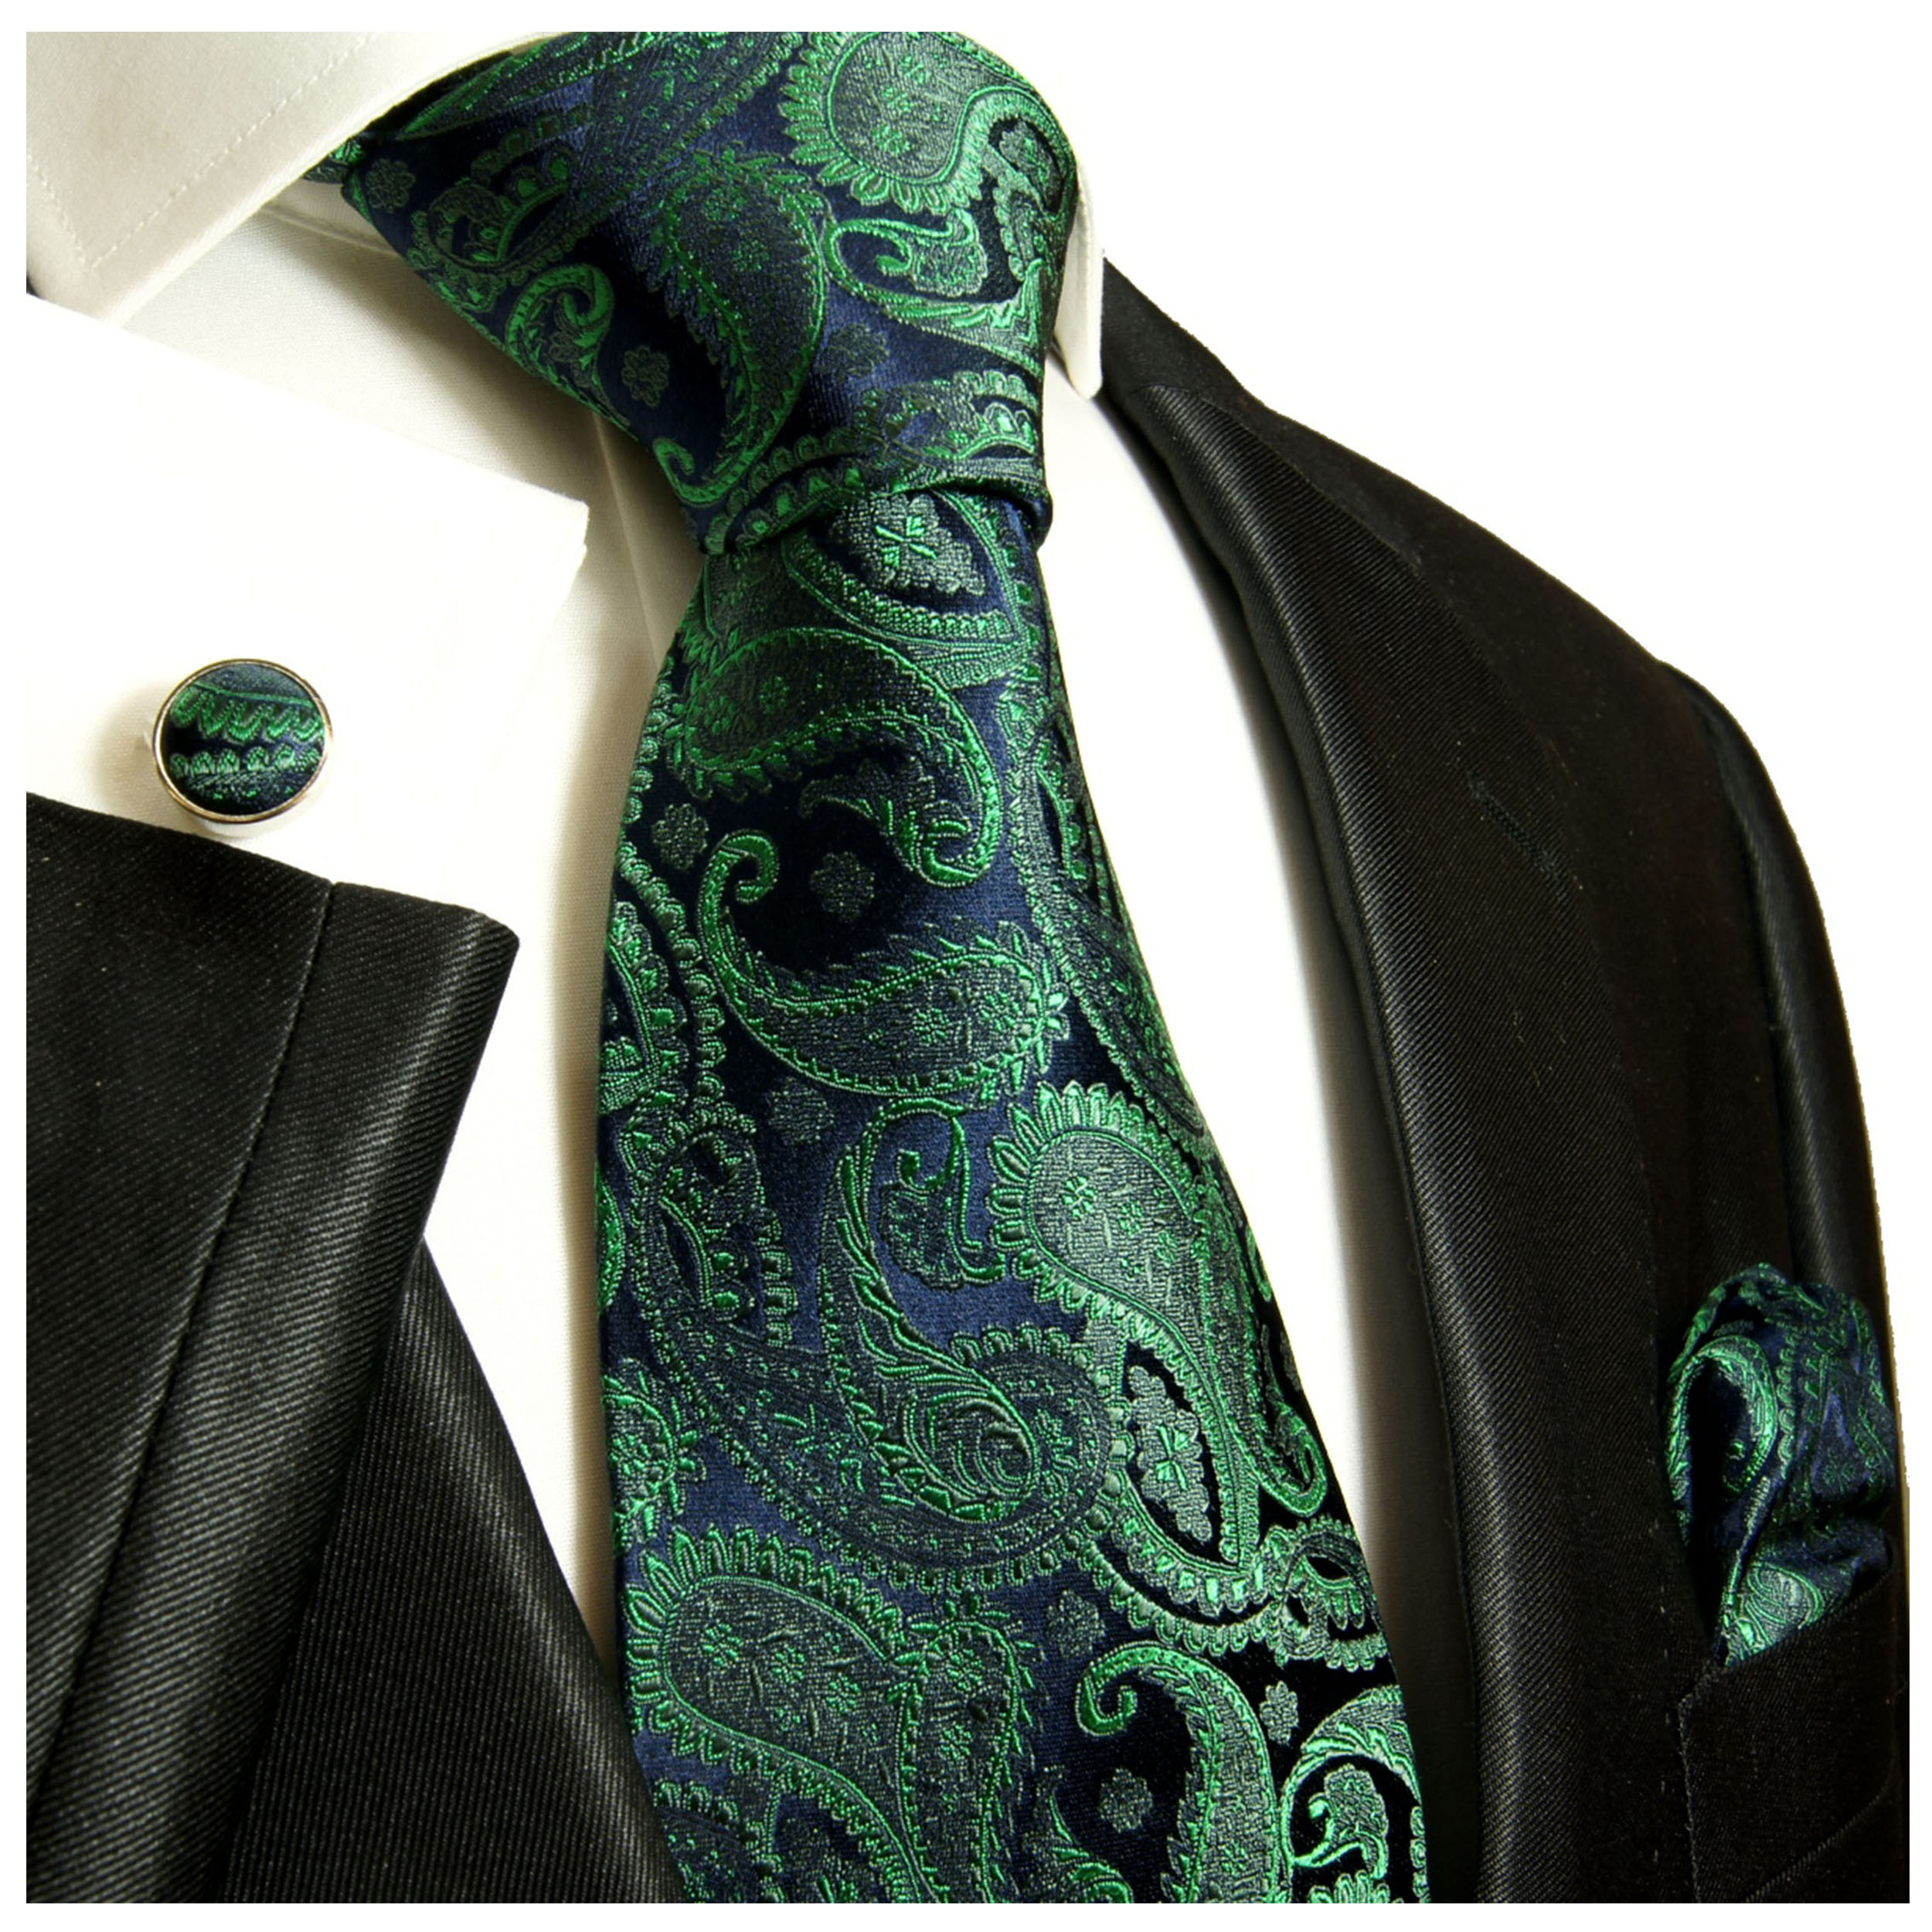 Einstecktuch Paul Malone 510 Krawatten Set 2tlg grün paisley Seidenkrawatte 